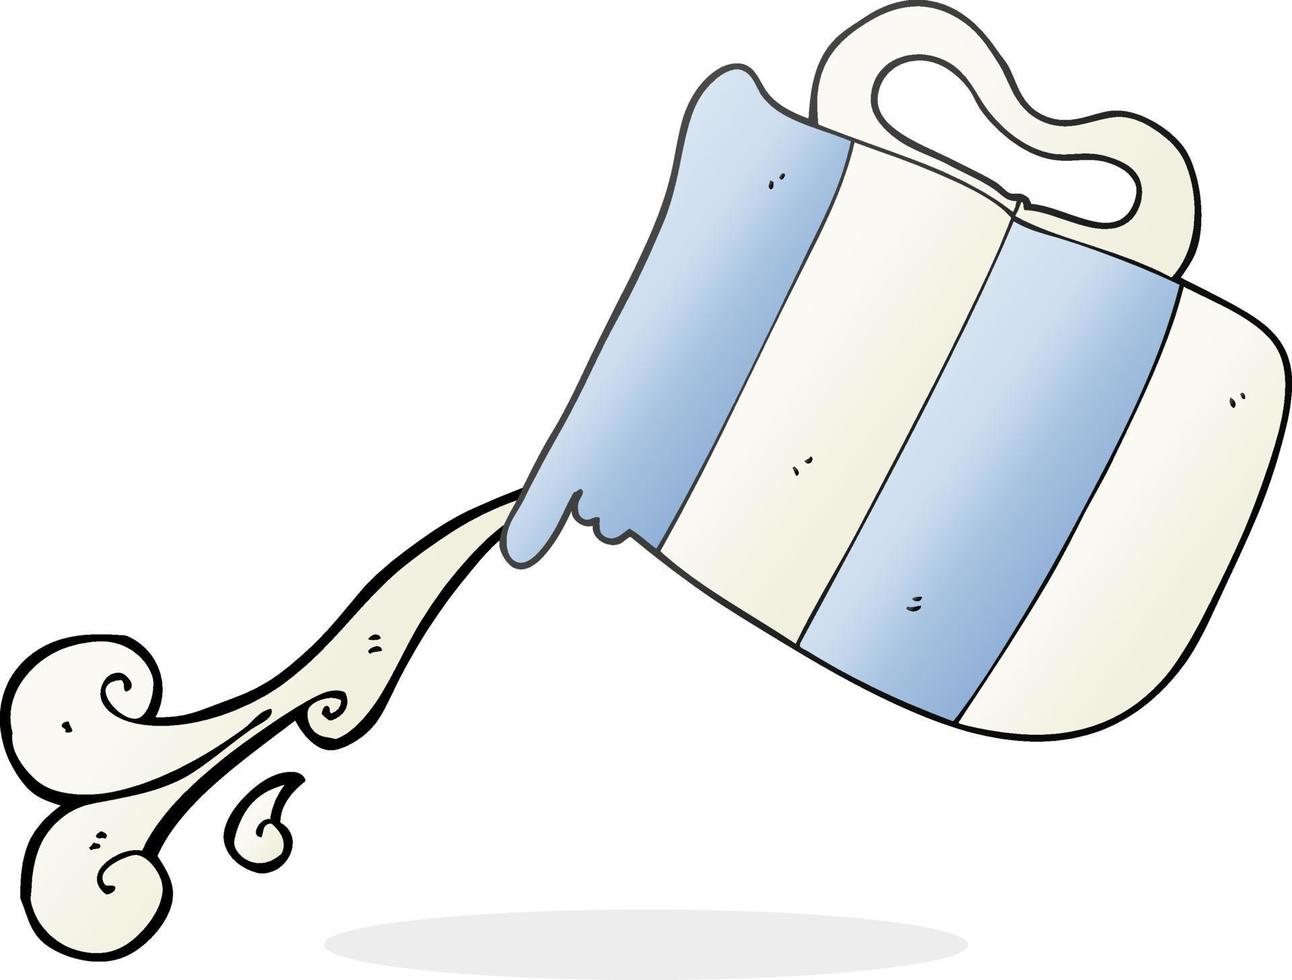 freehand drawn cartoon pouring milk jug vector